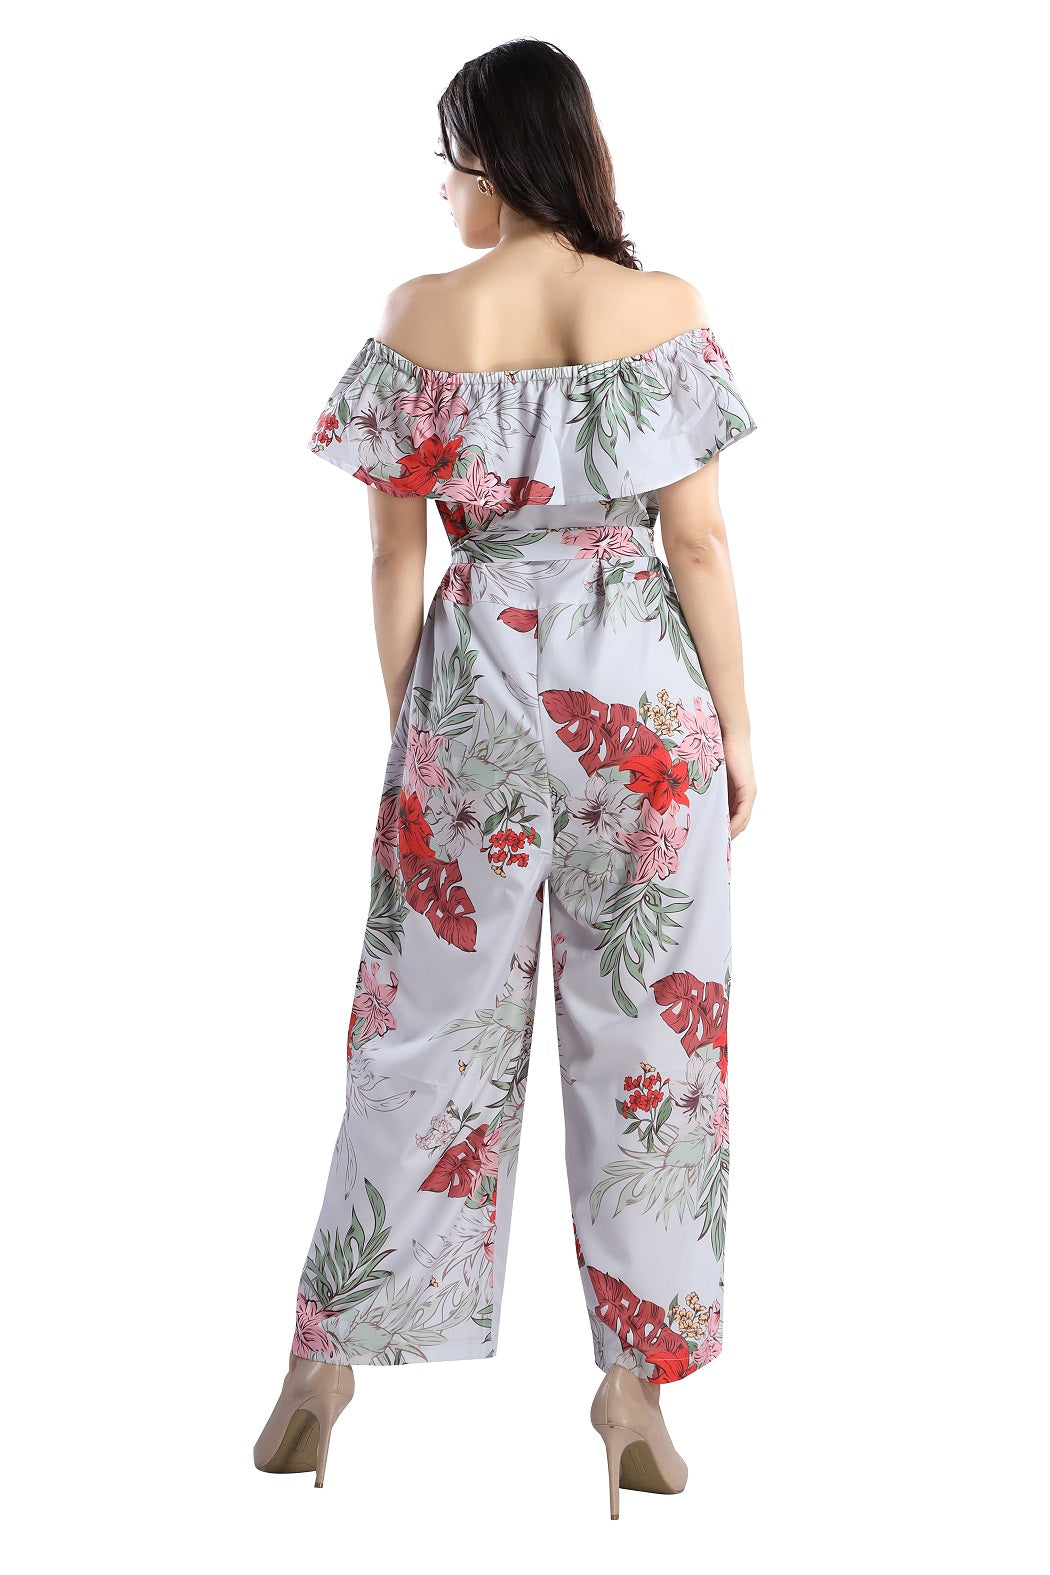 Cherrylavish Tropical Floral Print Jumpsuit With Ruffle On Bust